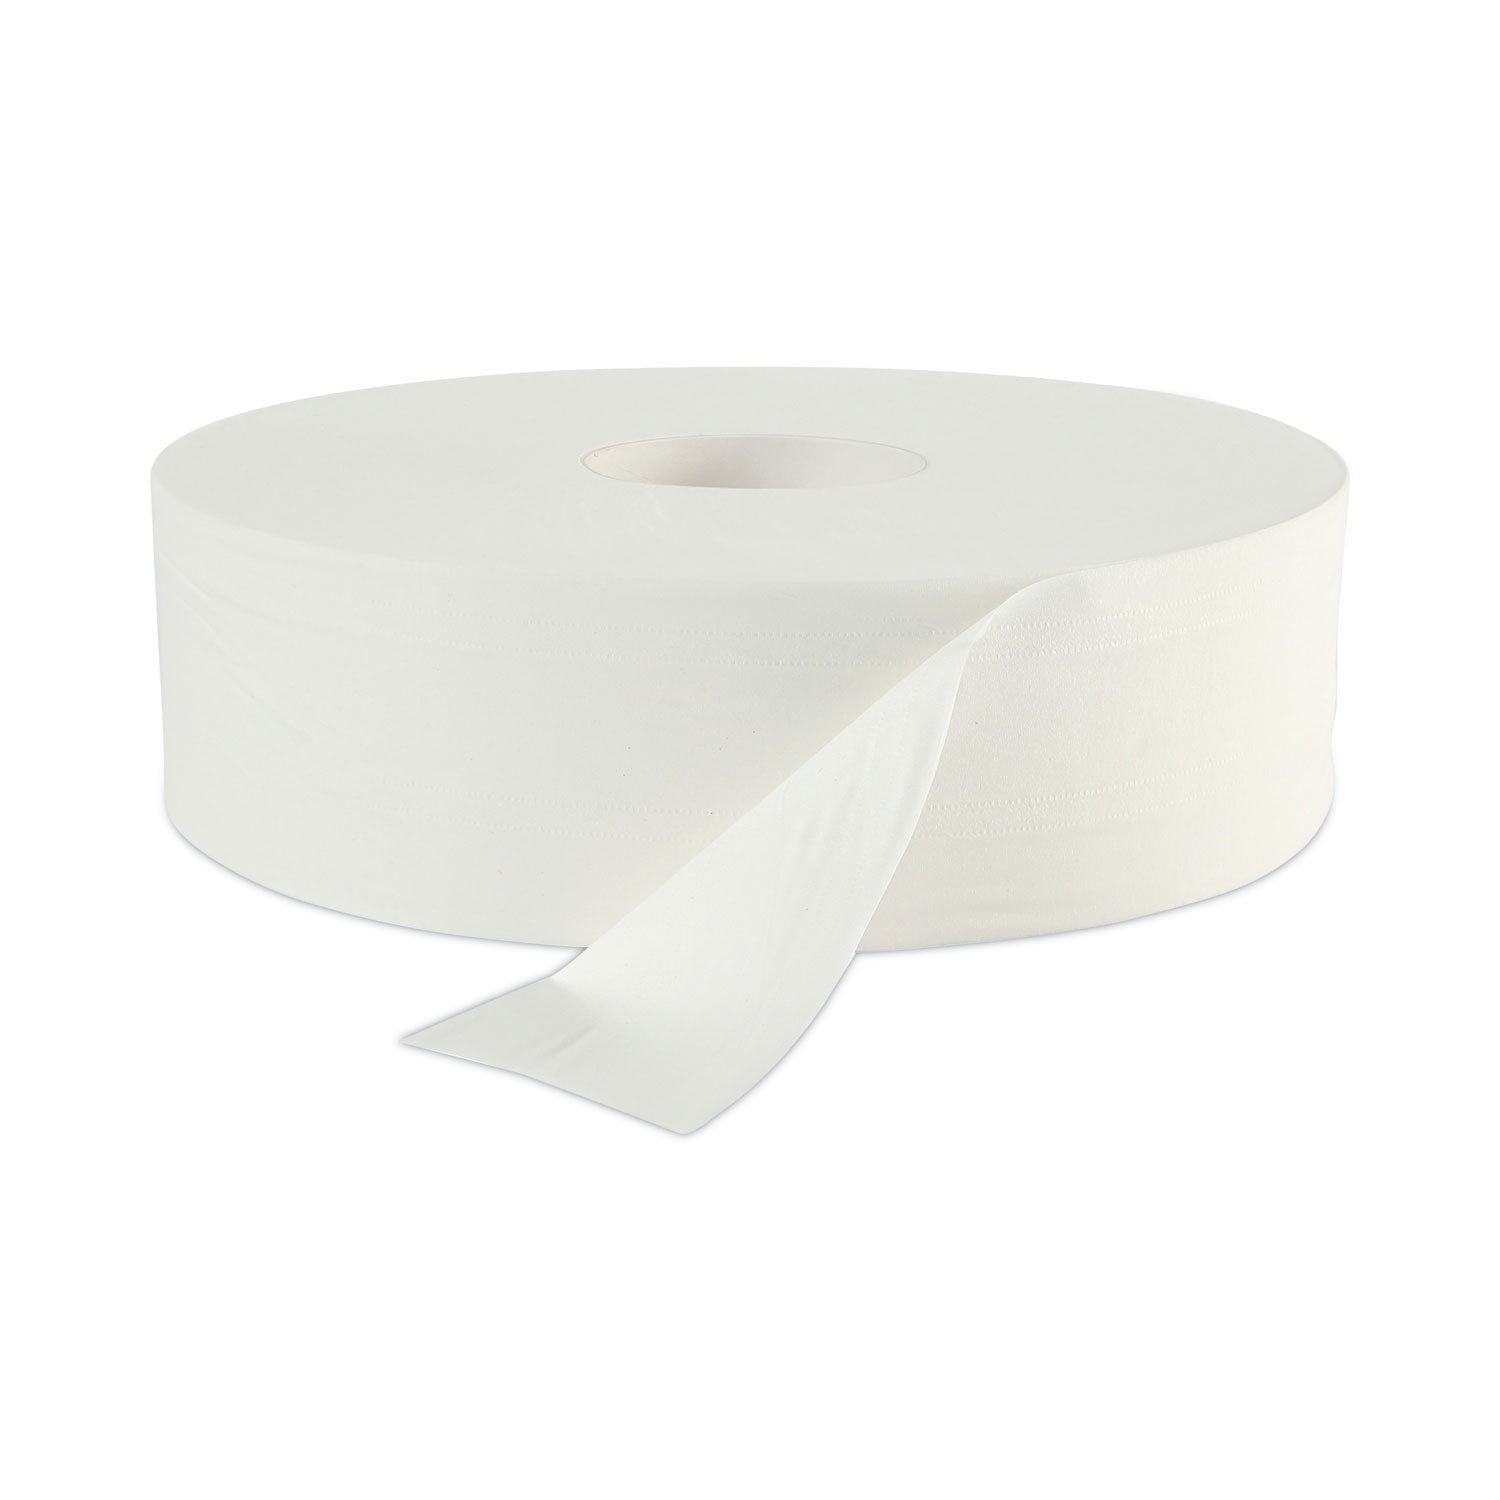 jrt-bath-tissue-jumbo-septic-safe-2-ply-white-35-x-2000-ft-12-dia-6-rolls-carton_bwk6102b - 1